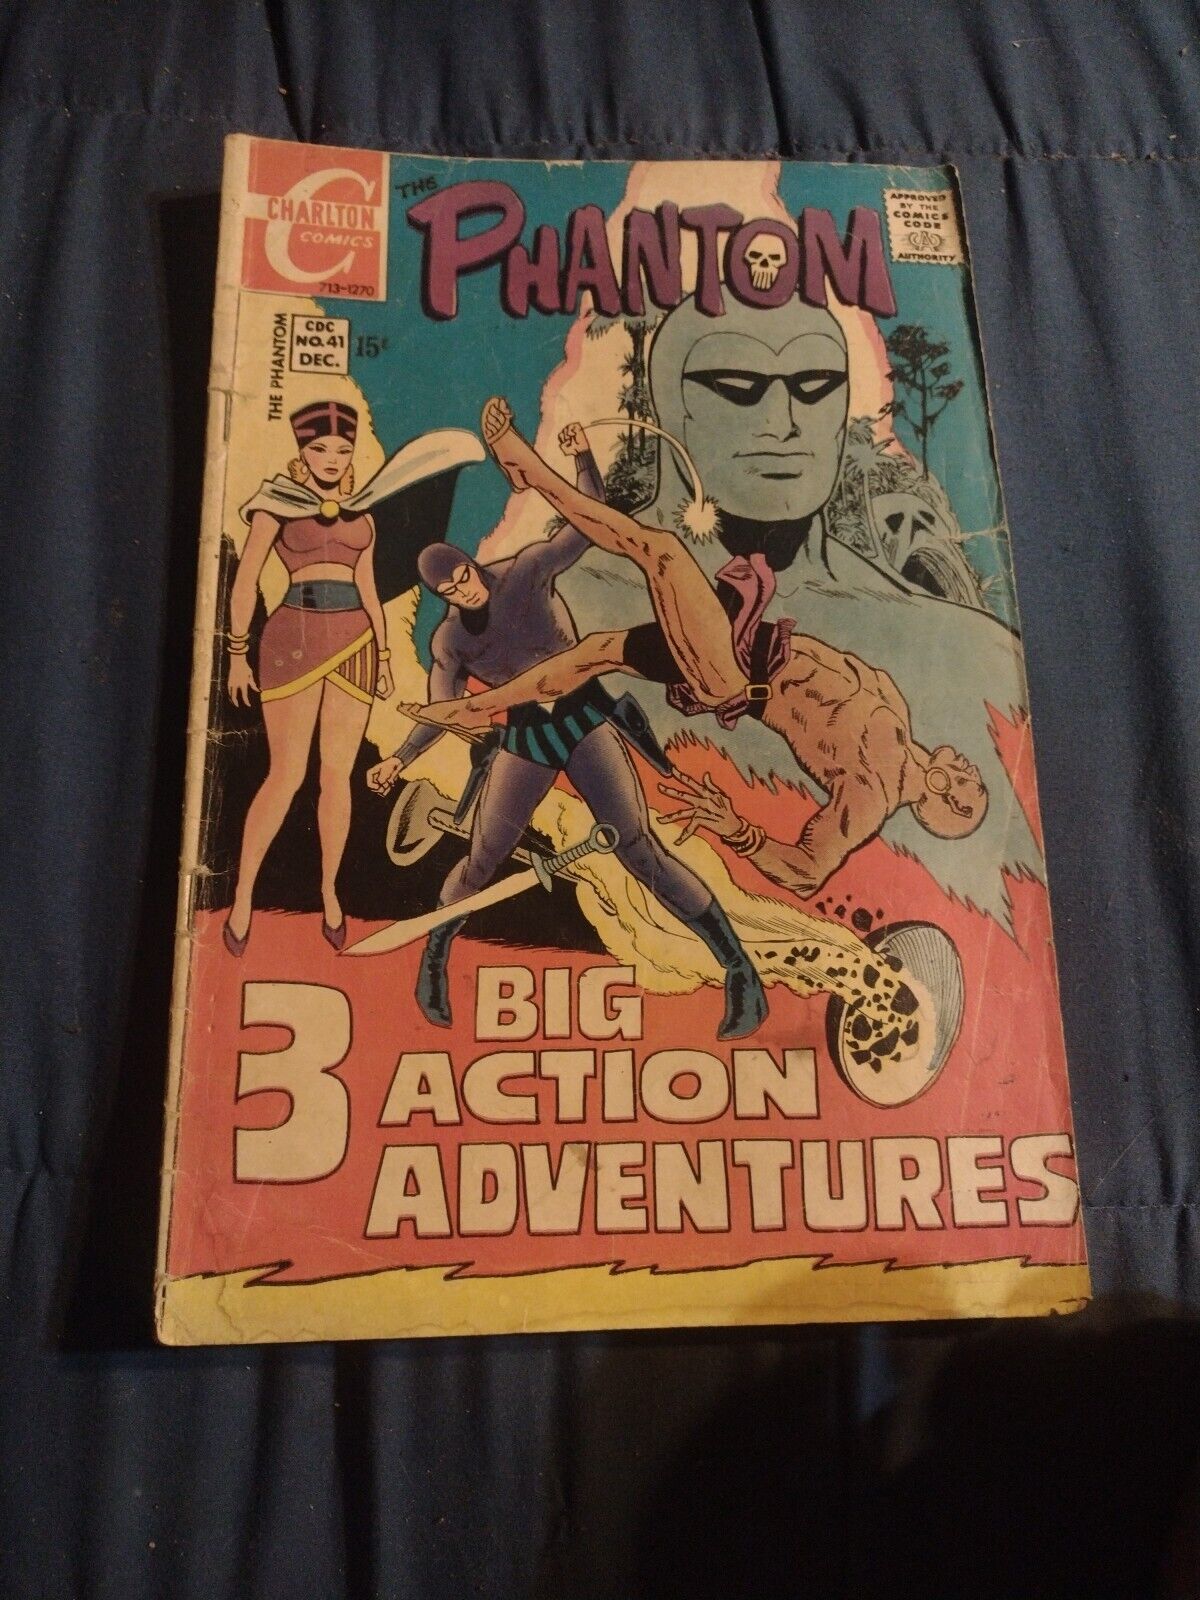 The Phantom #41 - Dec 1970 - Charlton Comics - (9038)